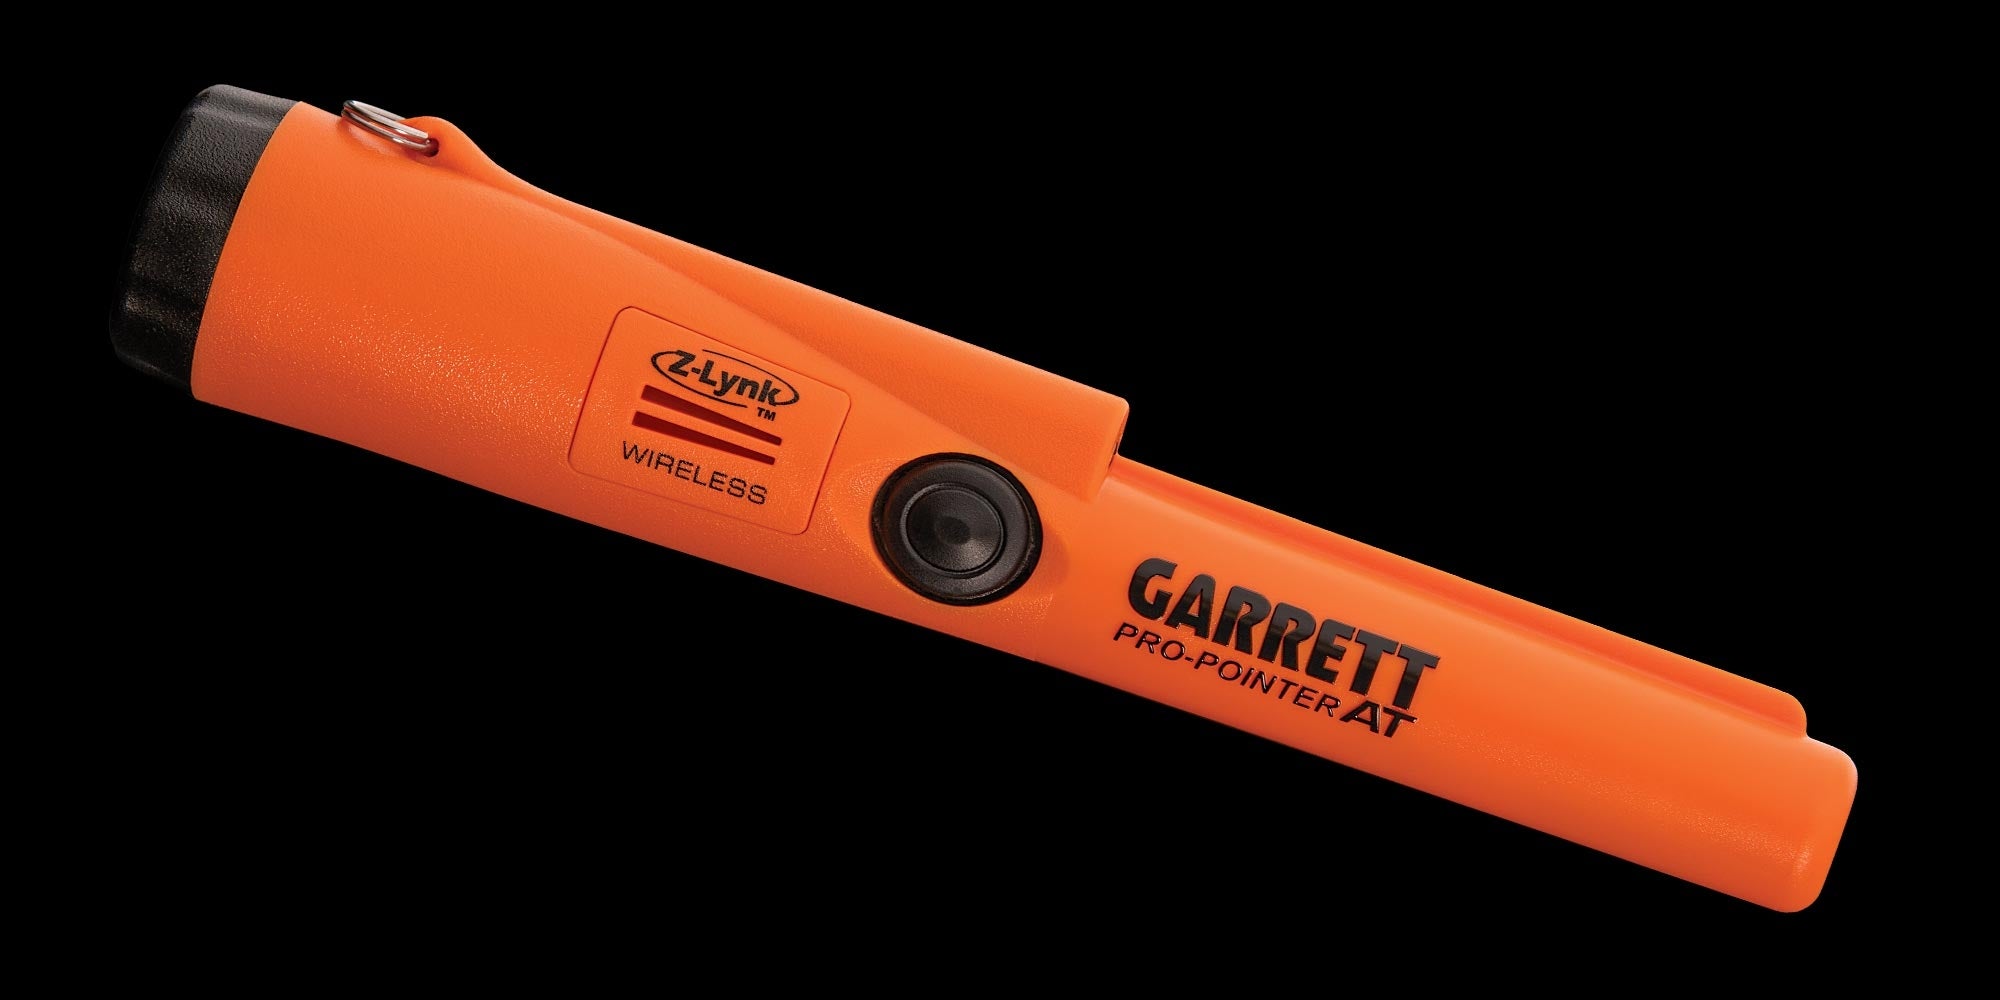 Garrett Pro-Pointer AT Z-lynk - History Seekers Metal Detectors